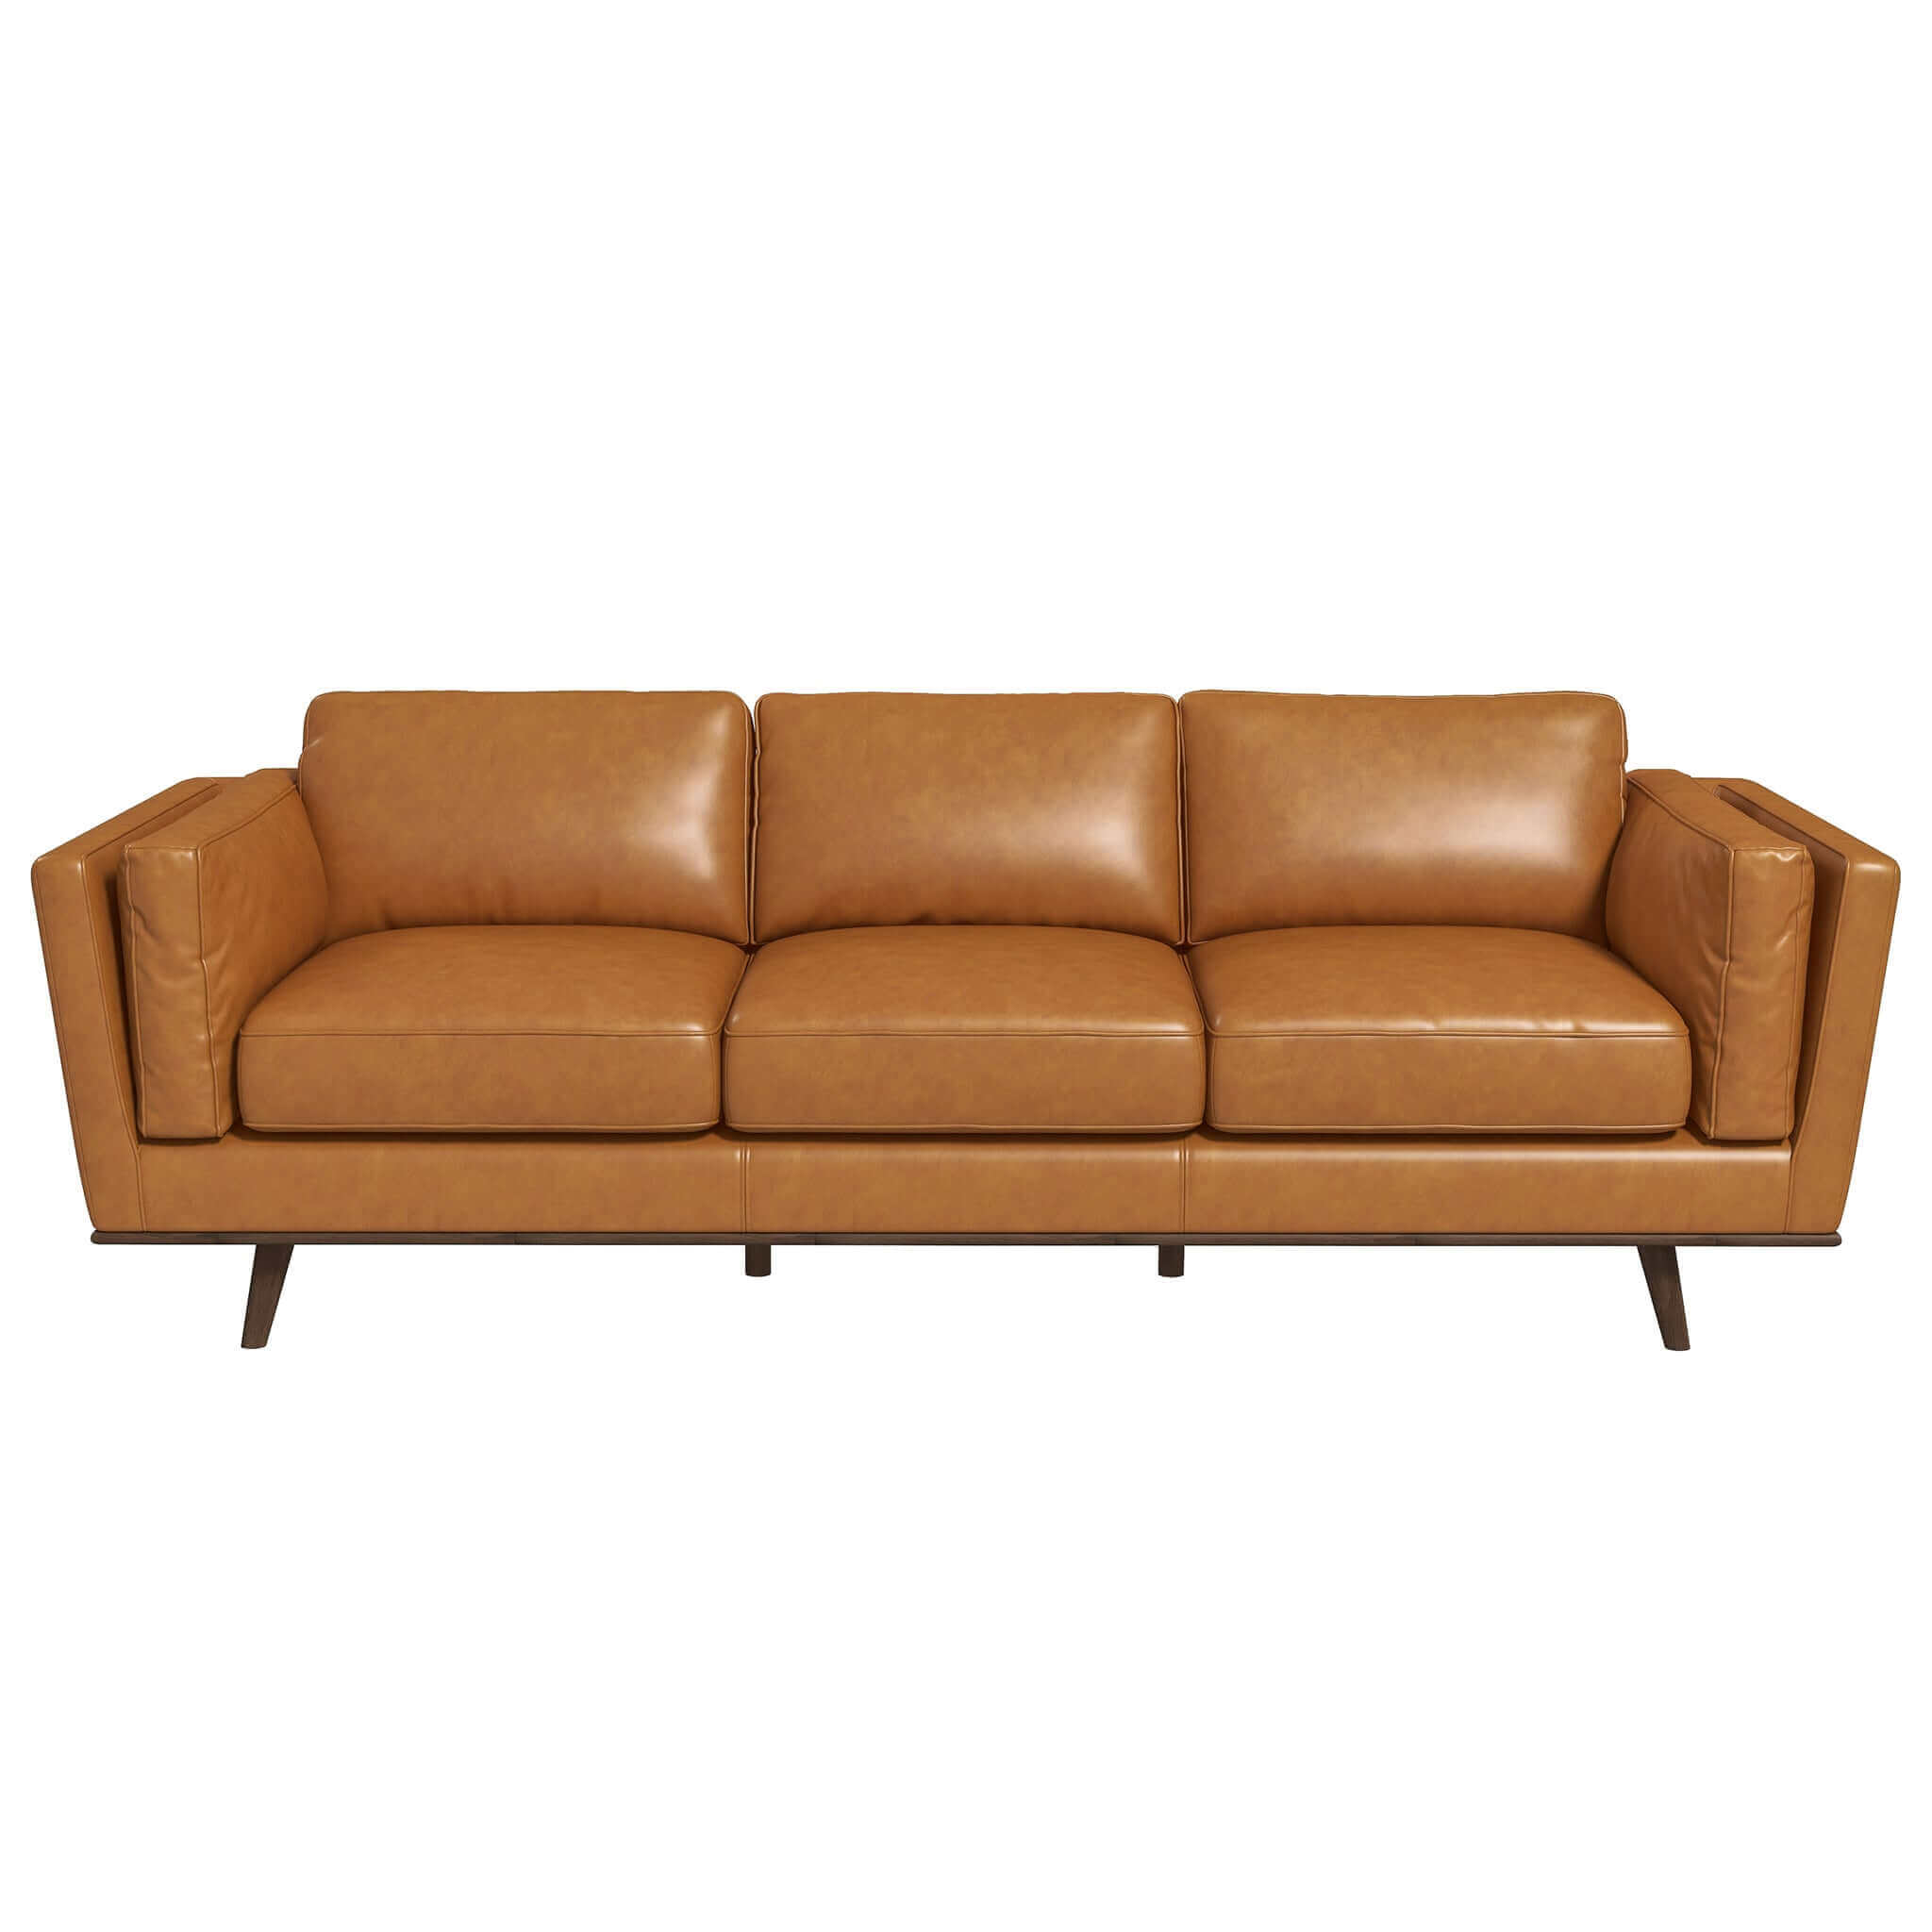 Mid Century Modern Leather Sofa Asy